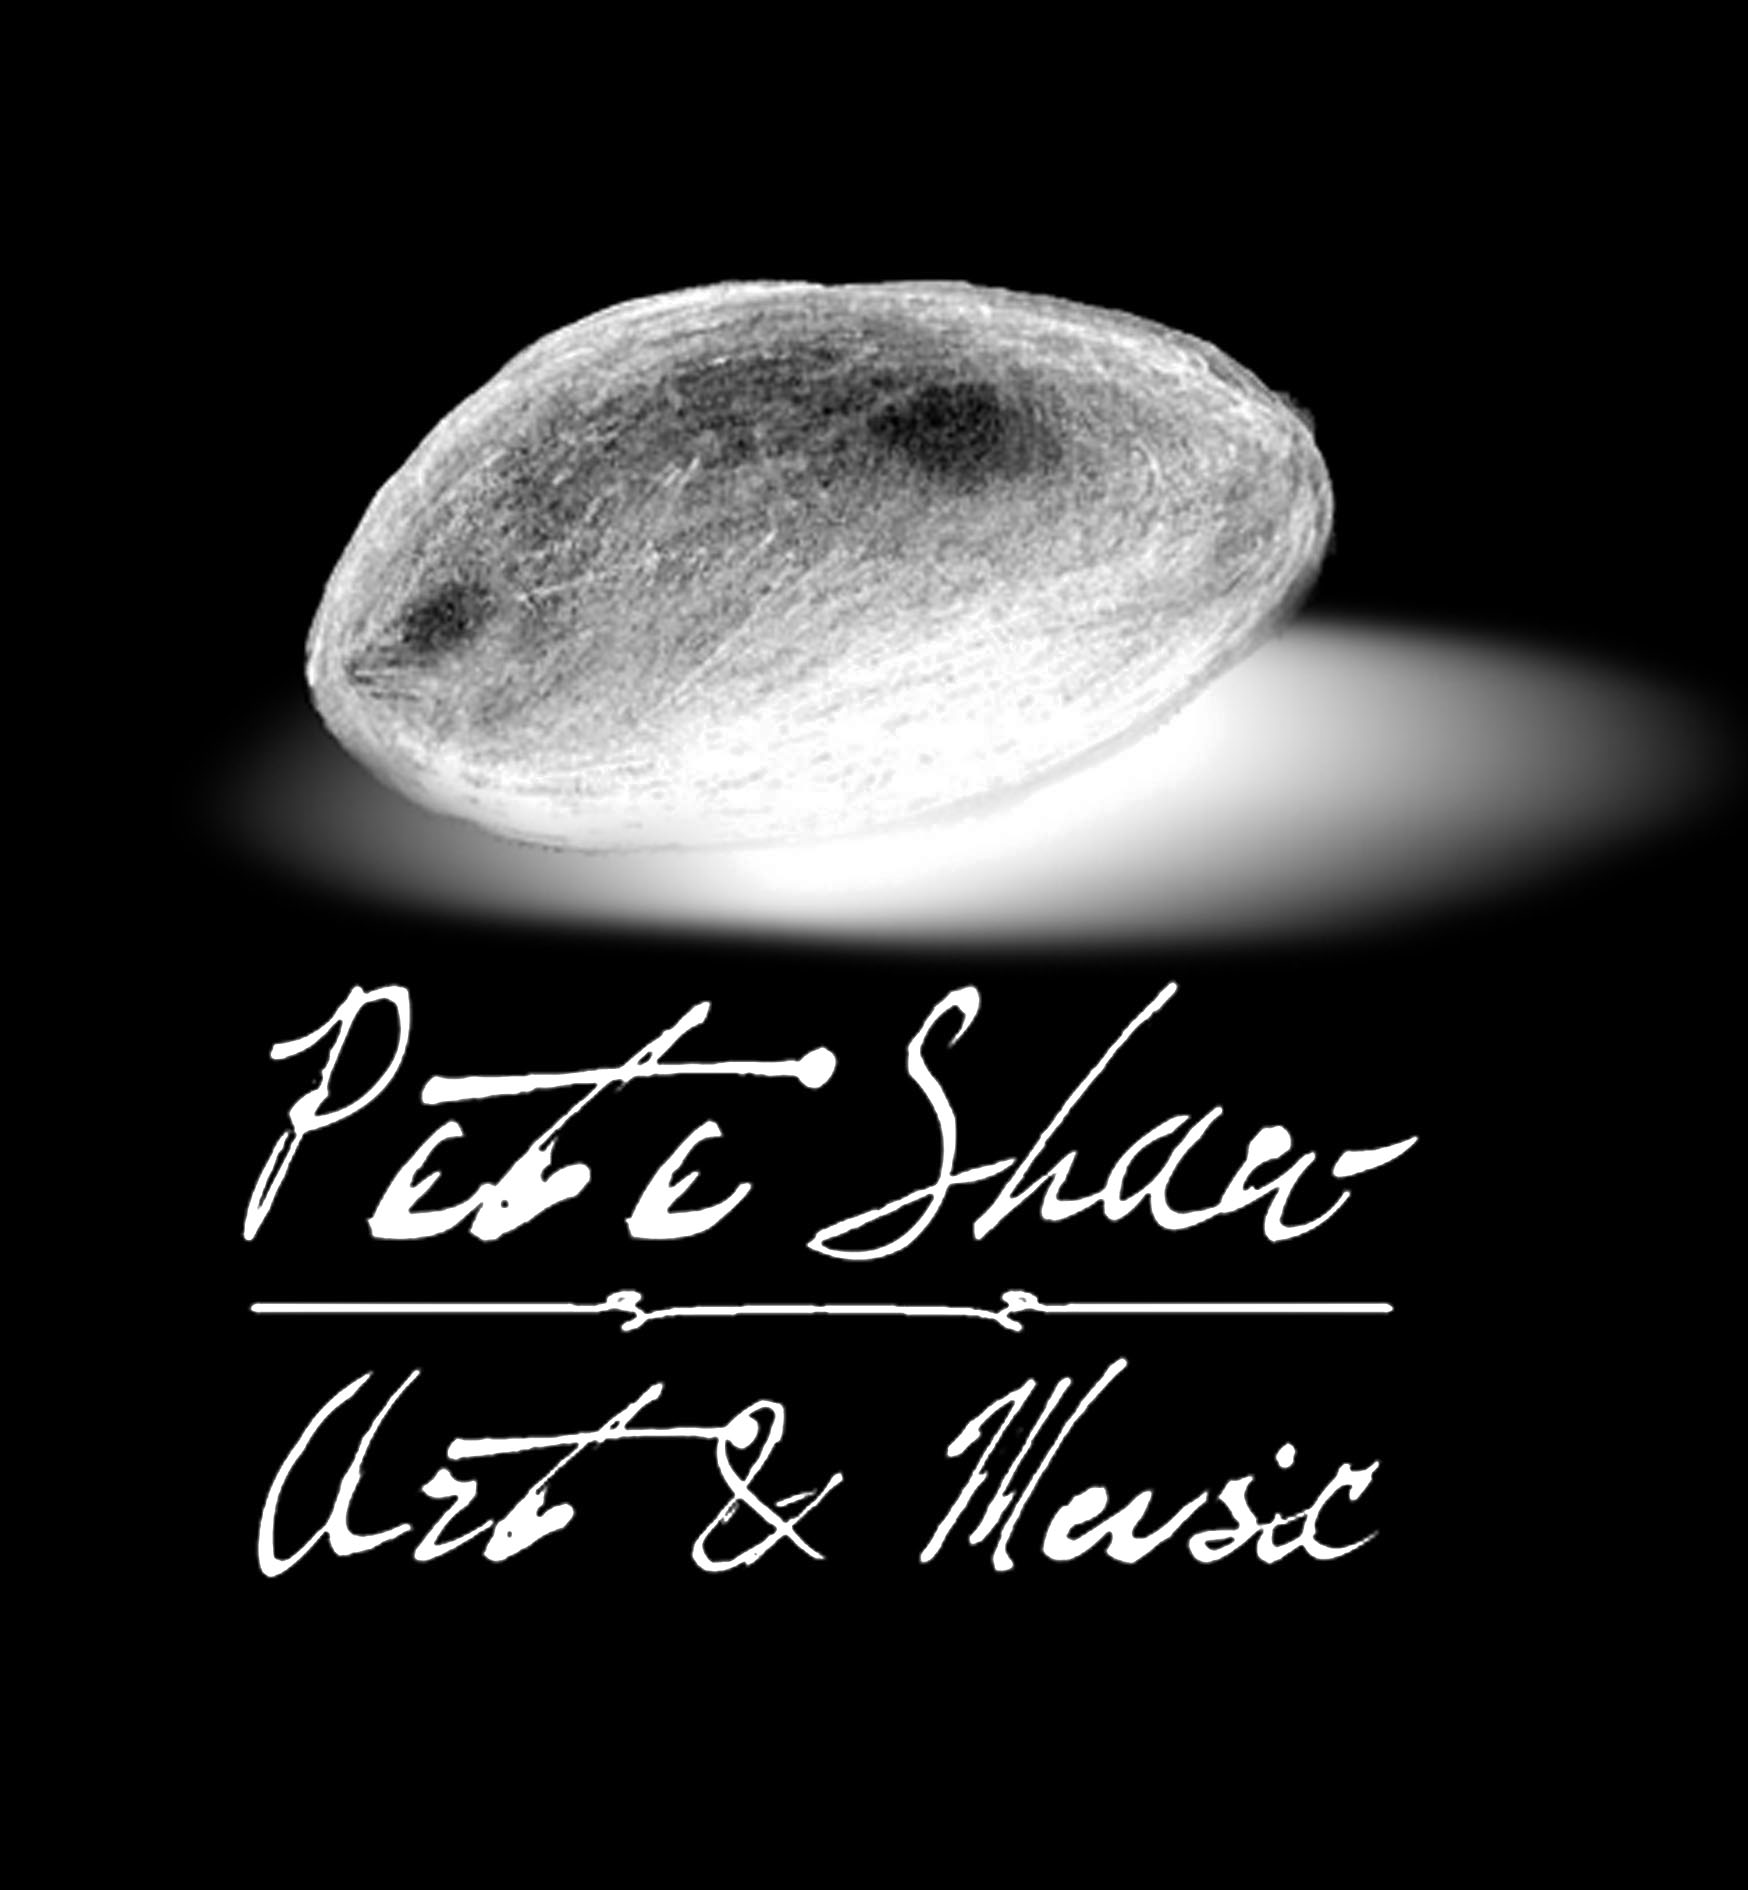 Pete Shaw Arts & Music